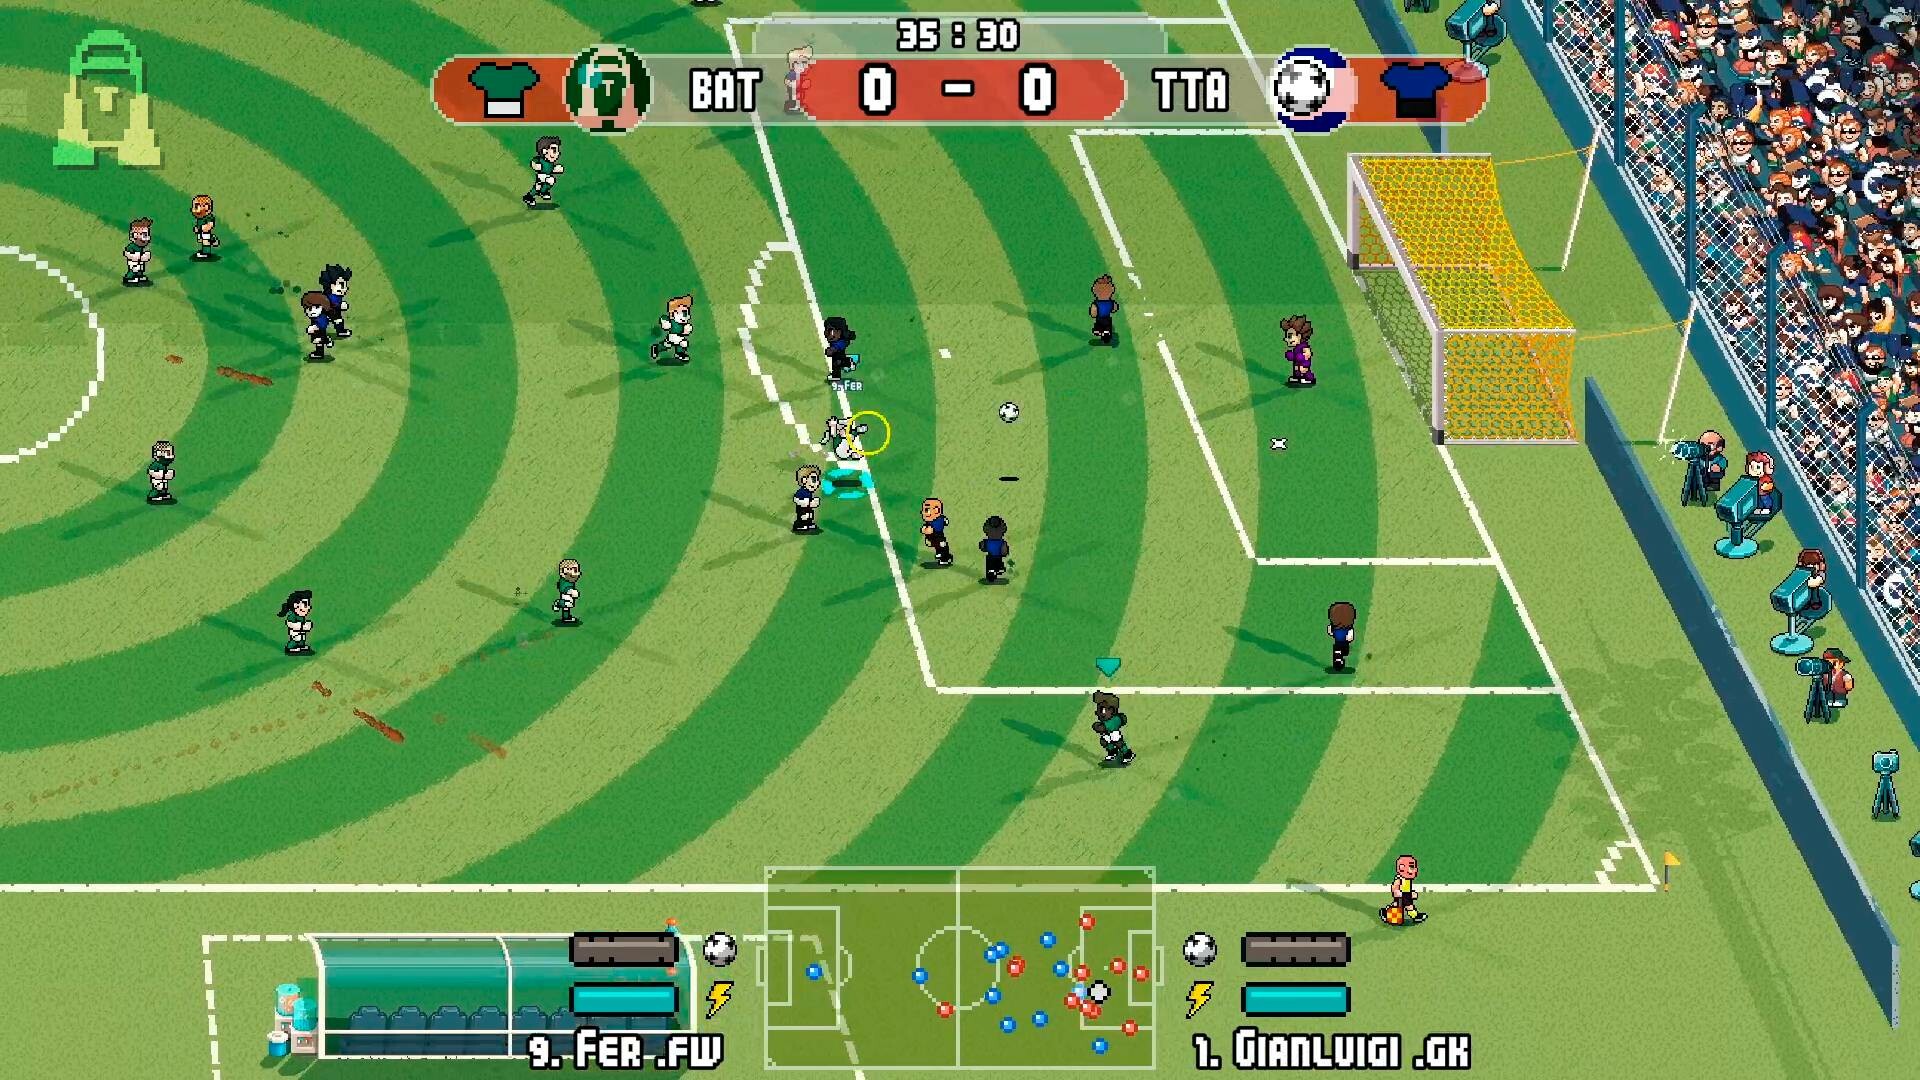 像素足球杯终极版/Pixel Cup Soccer – Ultimate Edition插图2